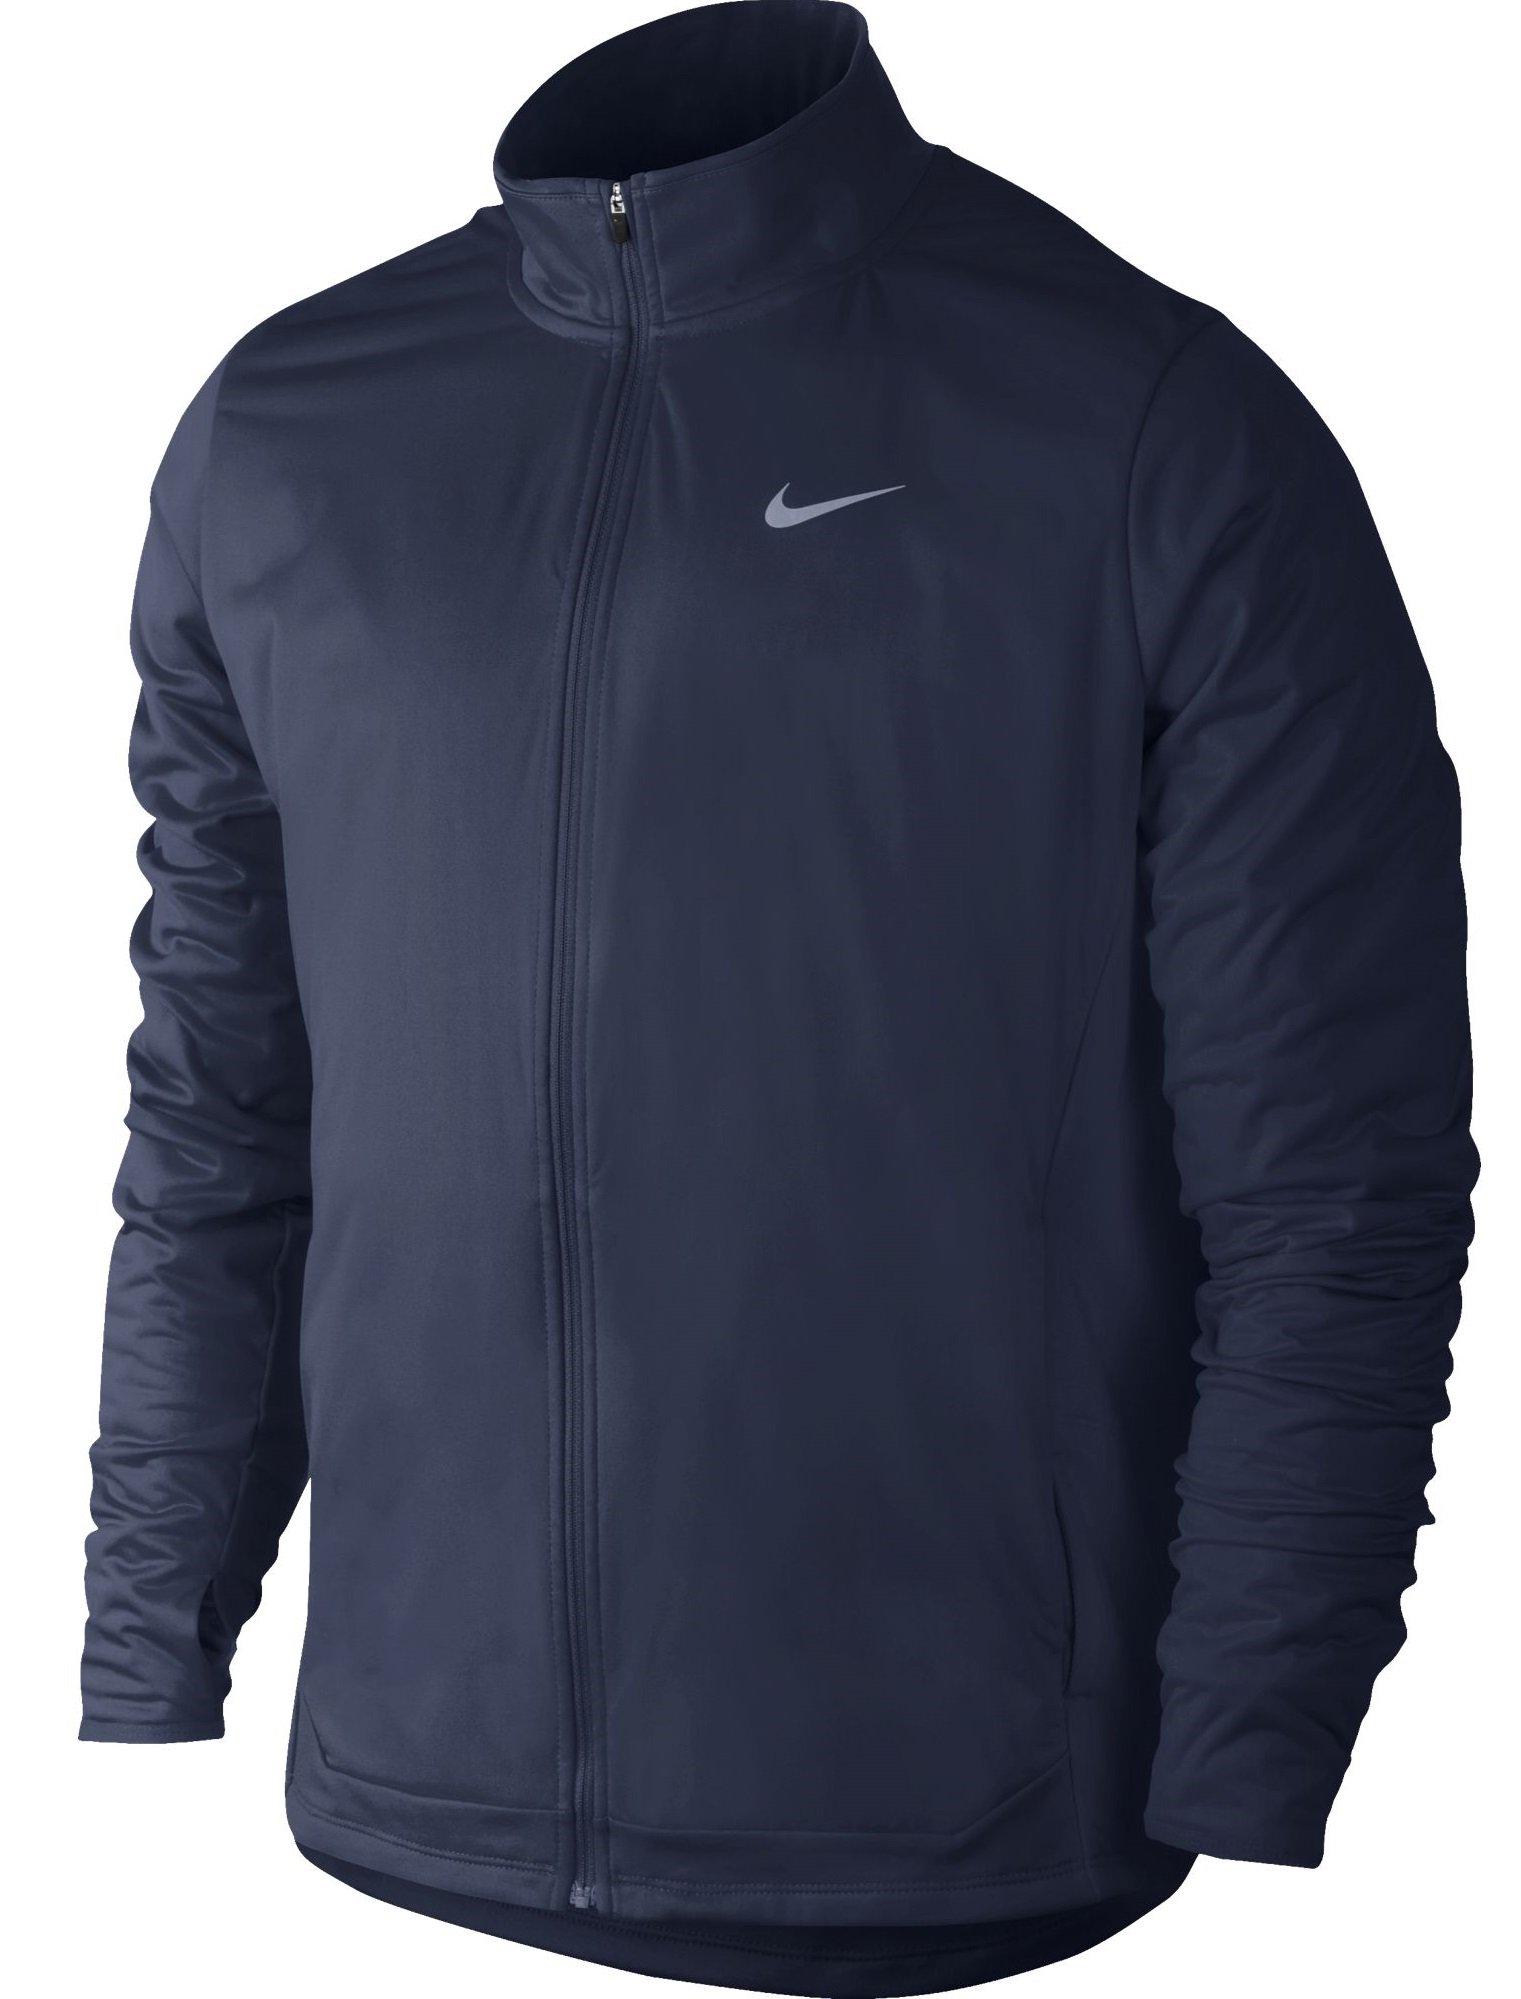 Nike Shield Full Zip Jacket 